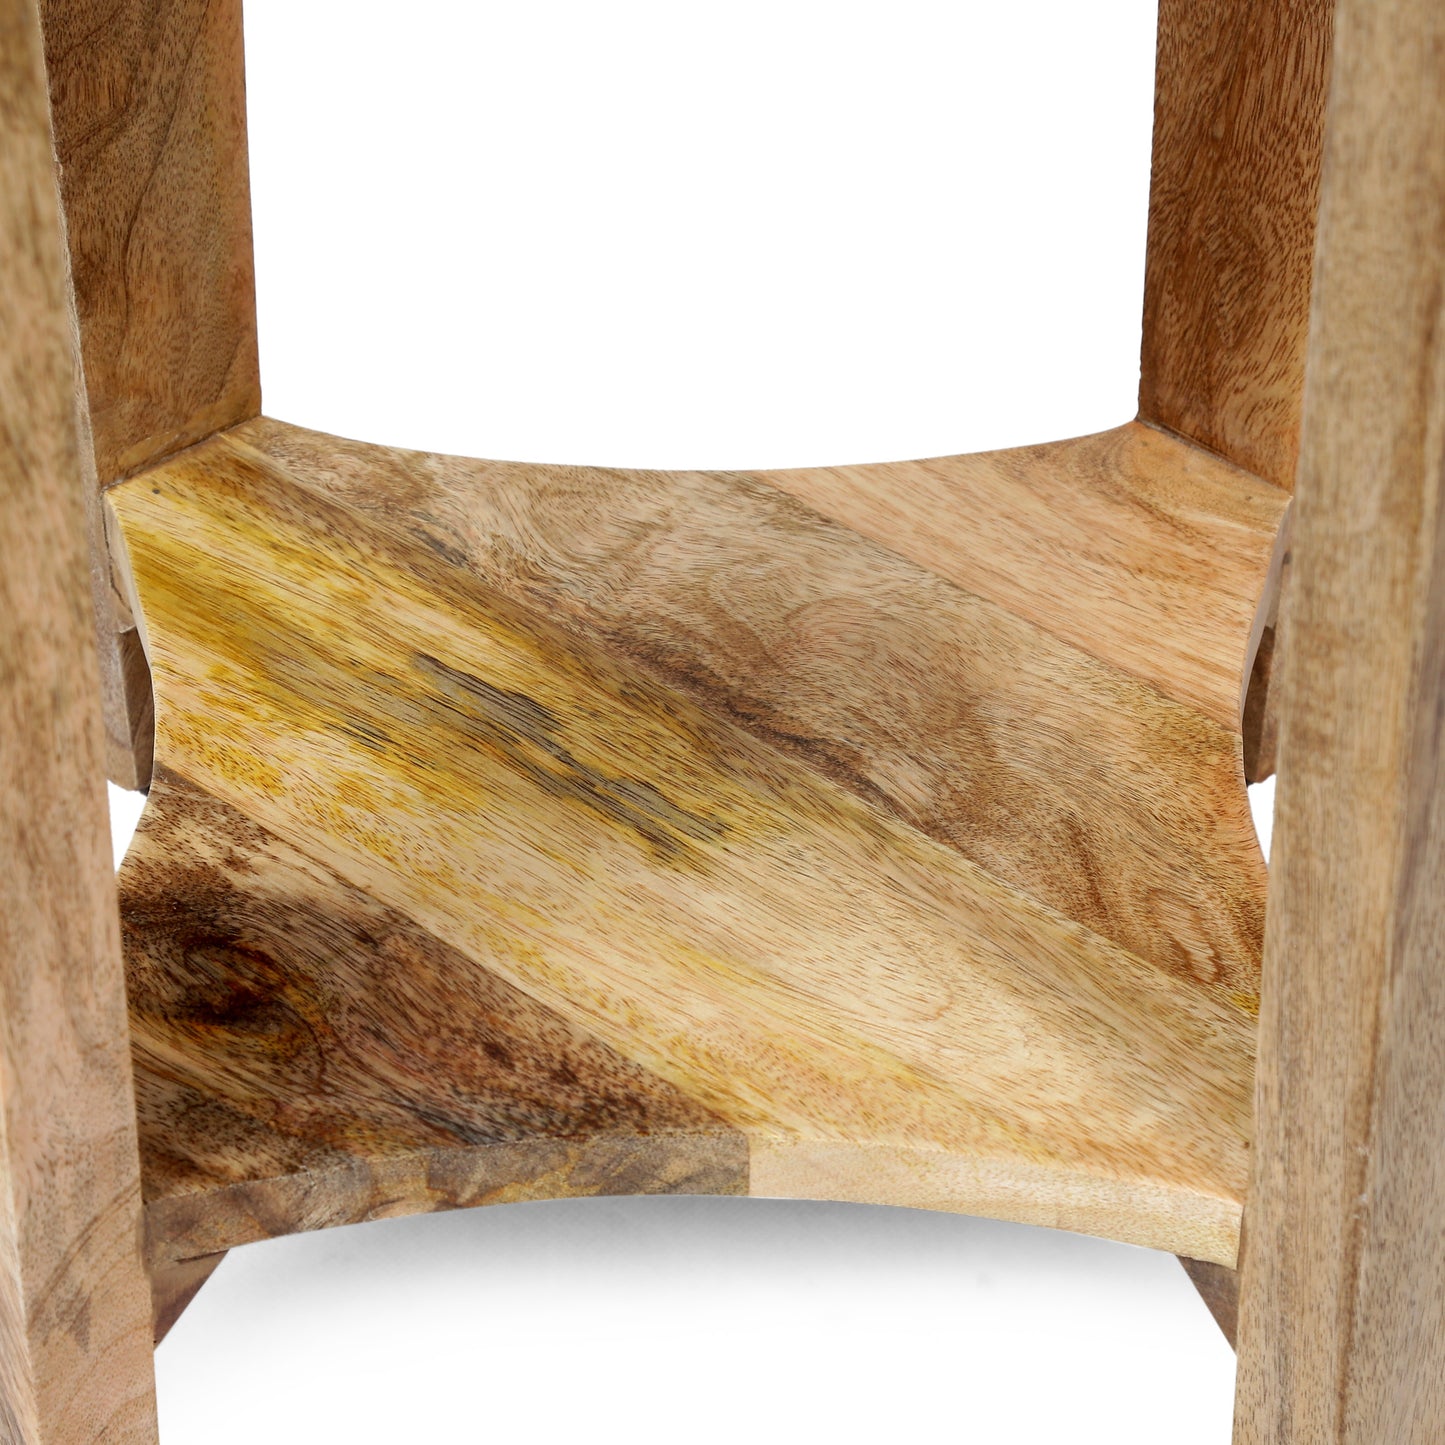 Bruce Handcrafted Boho Mango Wood Side Table